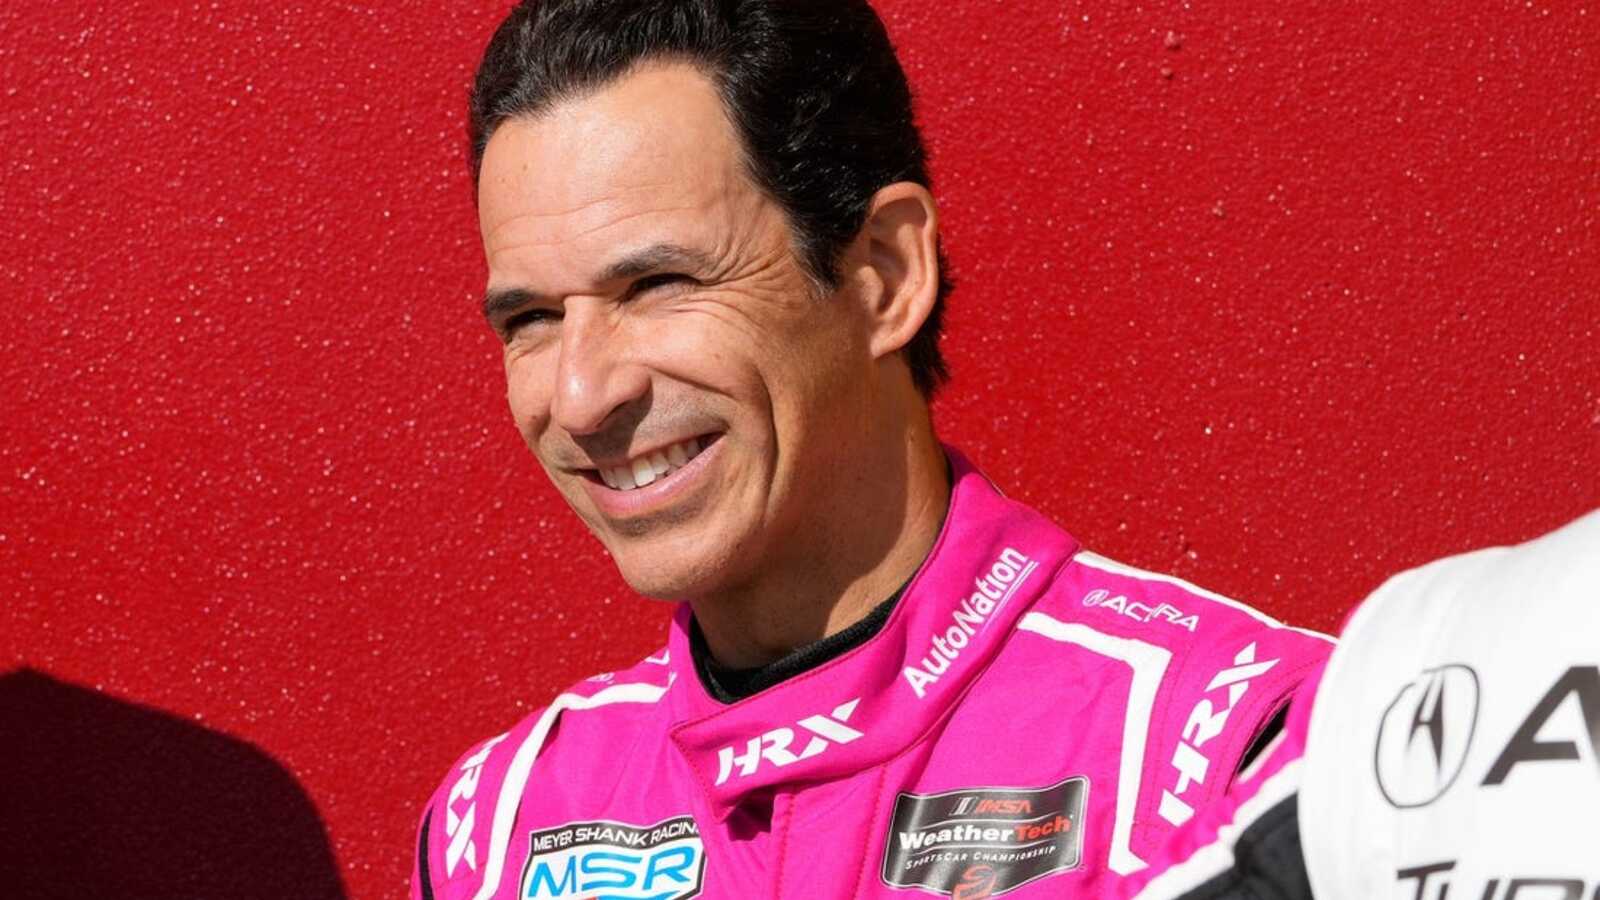 Helio Castroneves won't pursue Daytona 500 ride this year